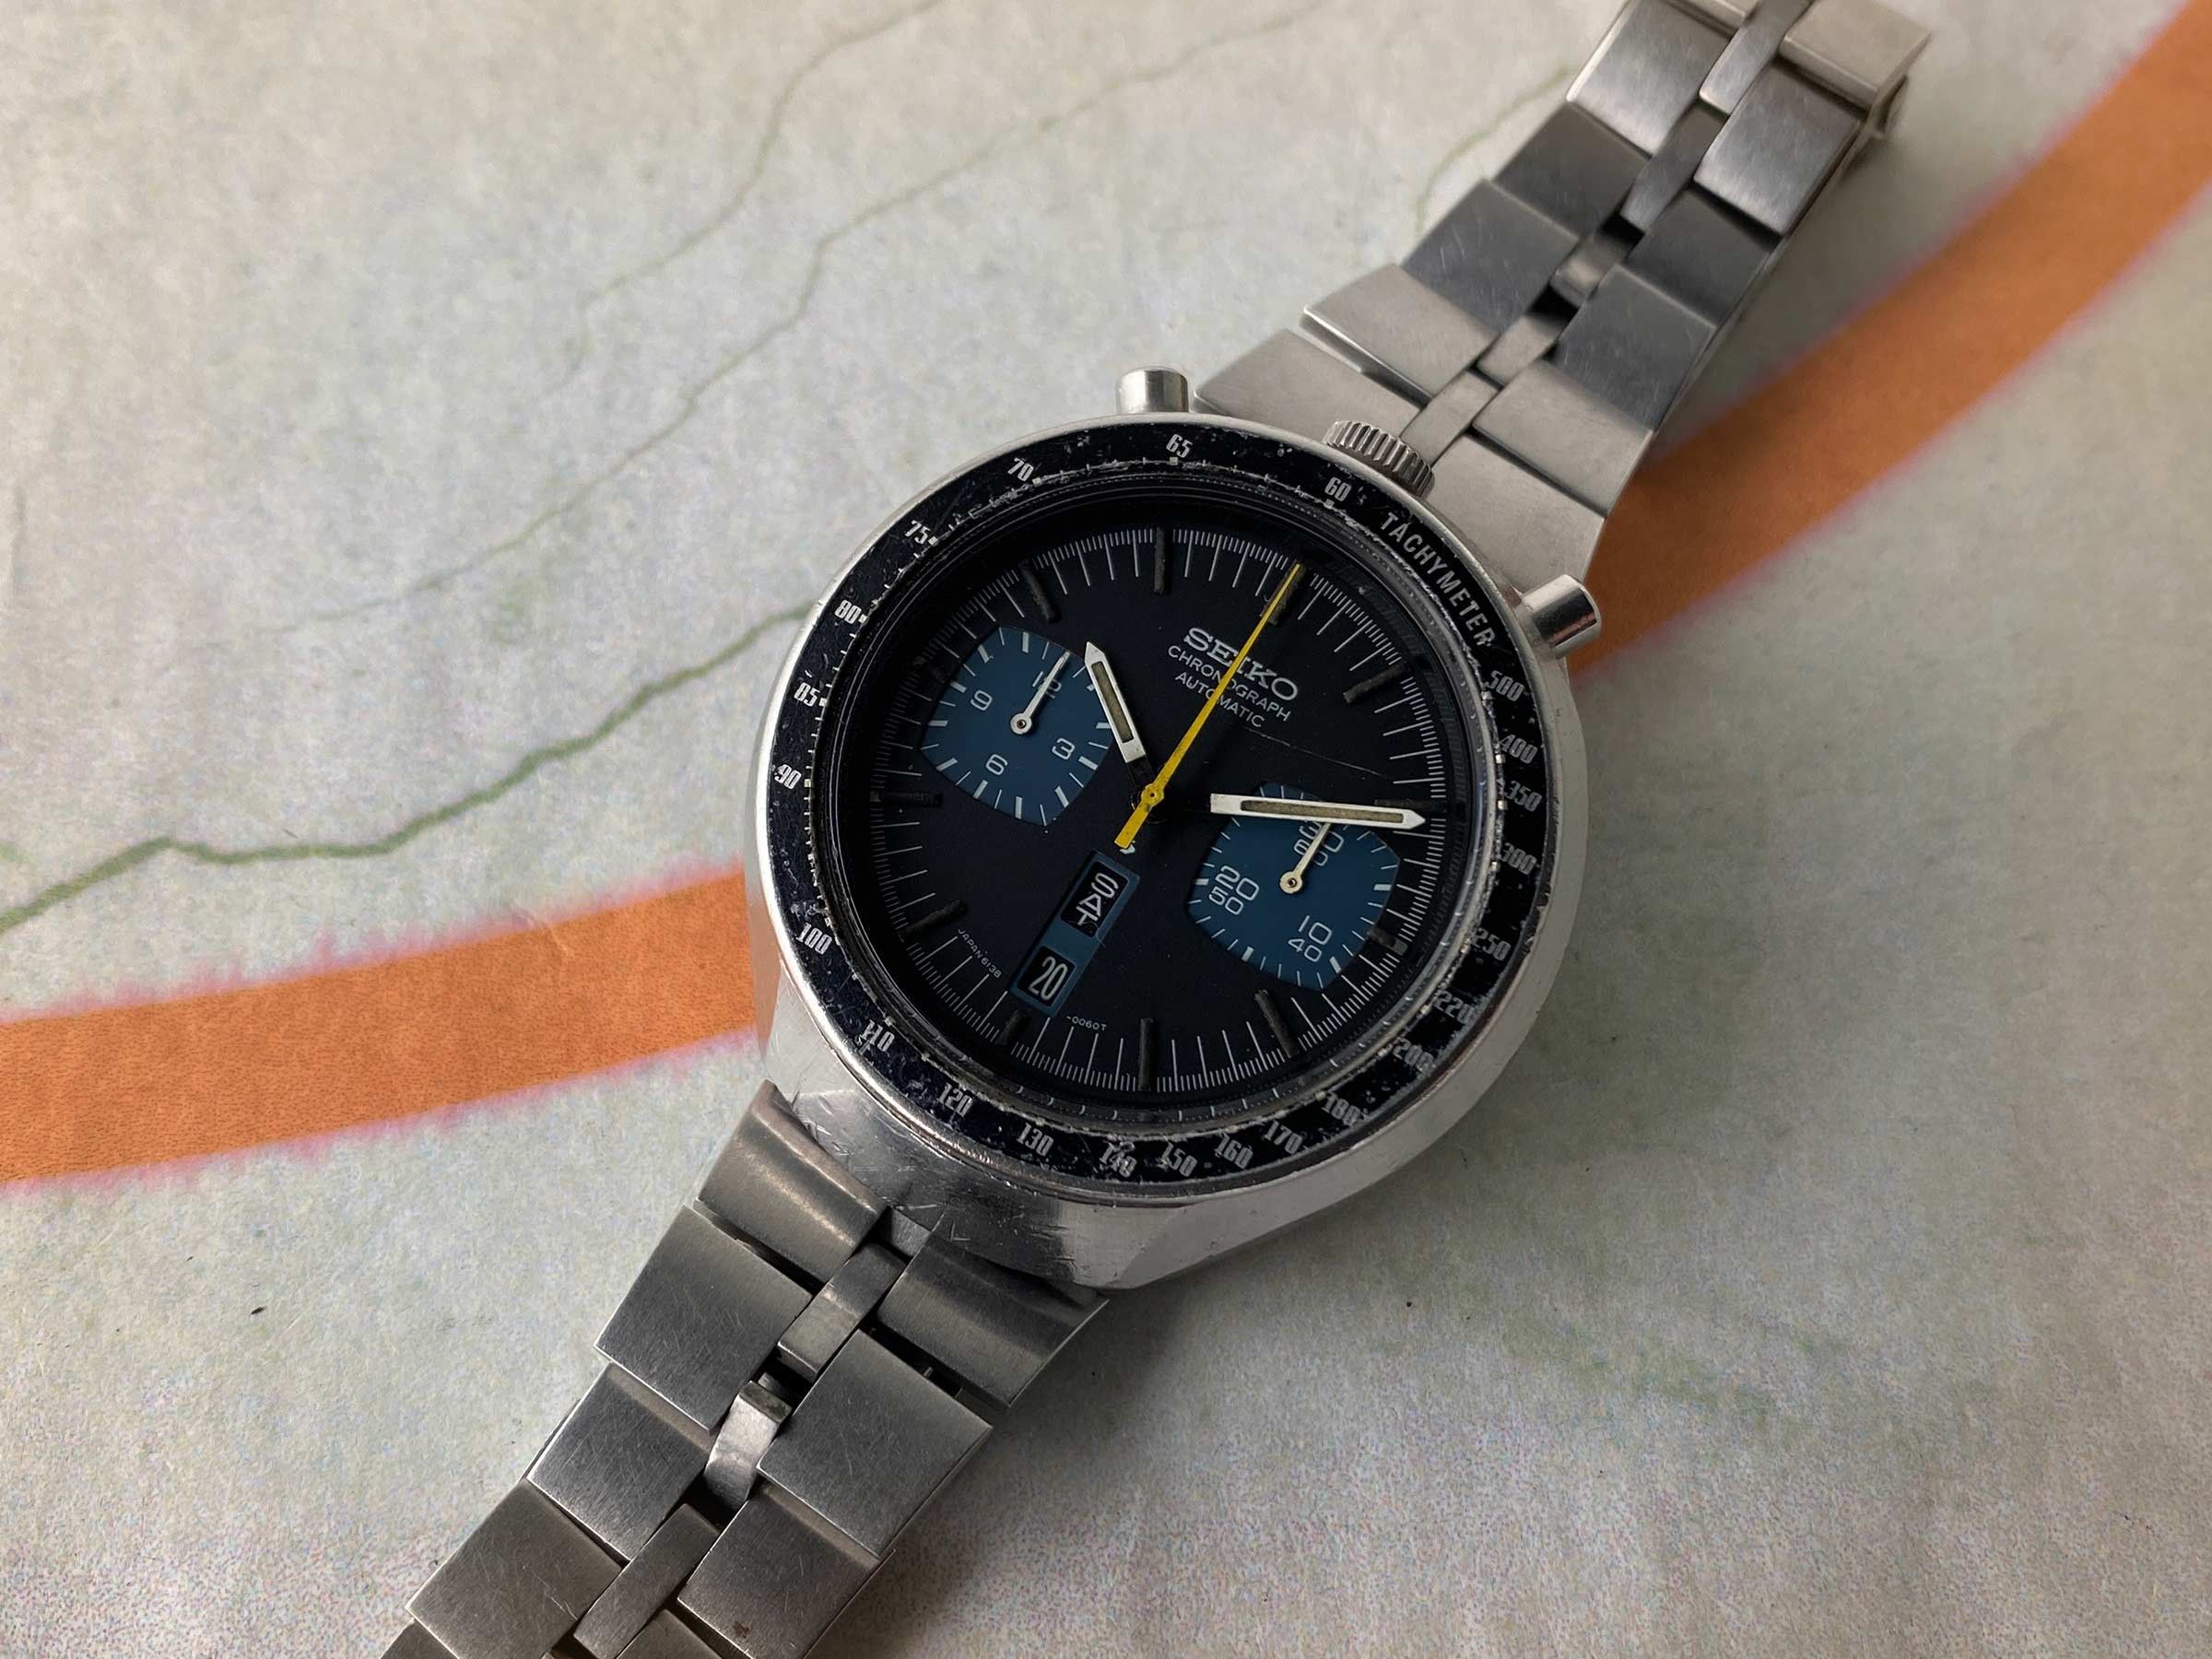 SEIKO BULLHEAD CHRONOGRAPH AUTOMATIC Ref 6138-0040 JAPAN J Vintage  automatic chronograph watch Cal 6138B *** ALL ORIGINAL *** Seiko Vintage  watches - Watches83